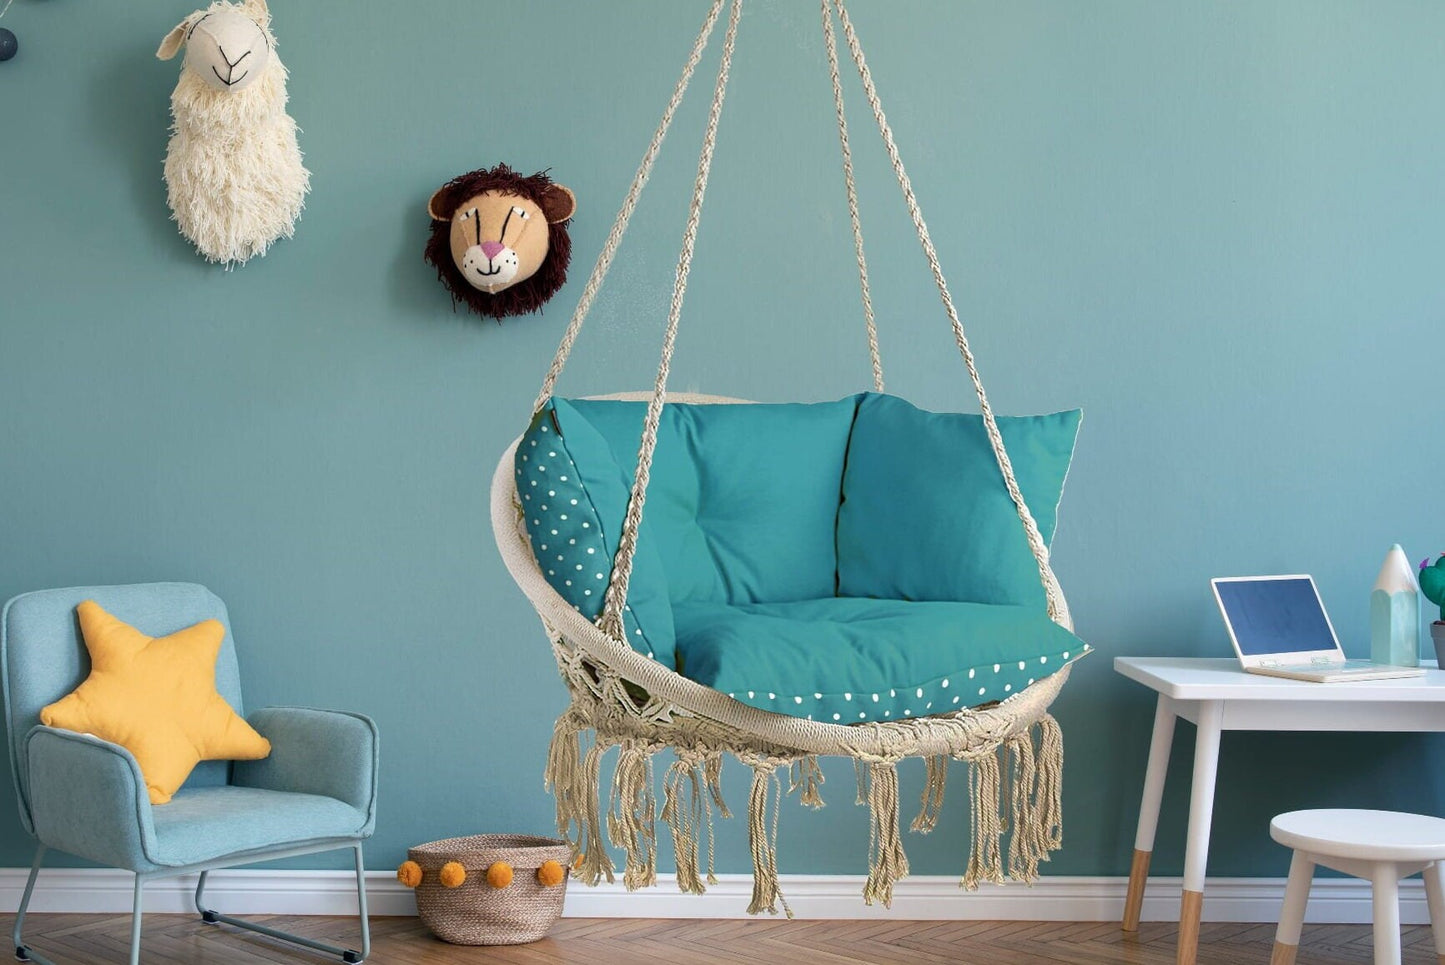 Double Sided Dots Pillow for Macrame Hanging Chair |  Cushion for hanging chair | Boho Scandinavian style pillow | Pillow for swing chair